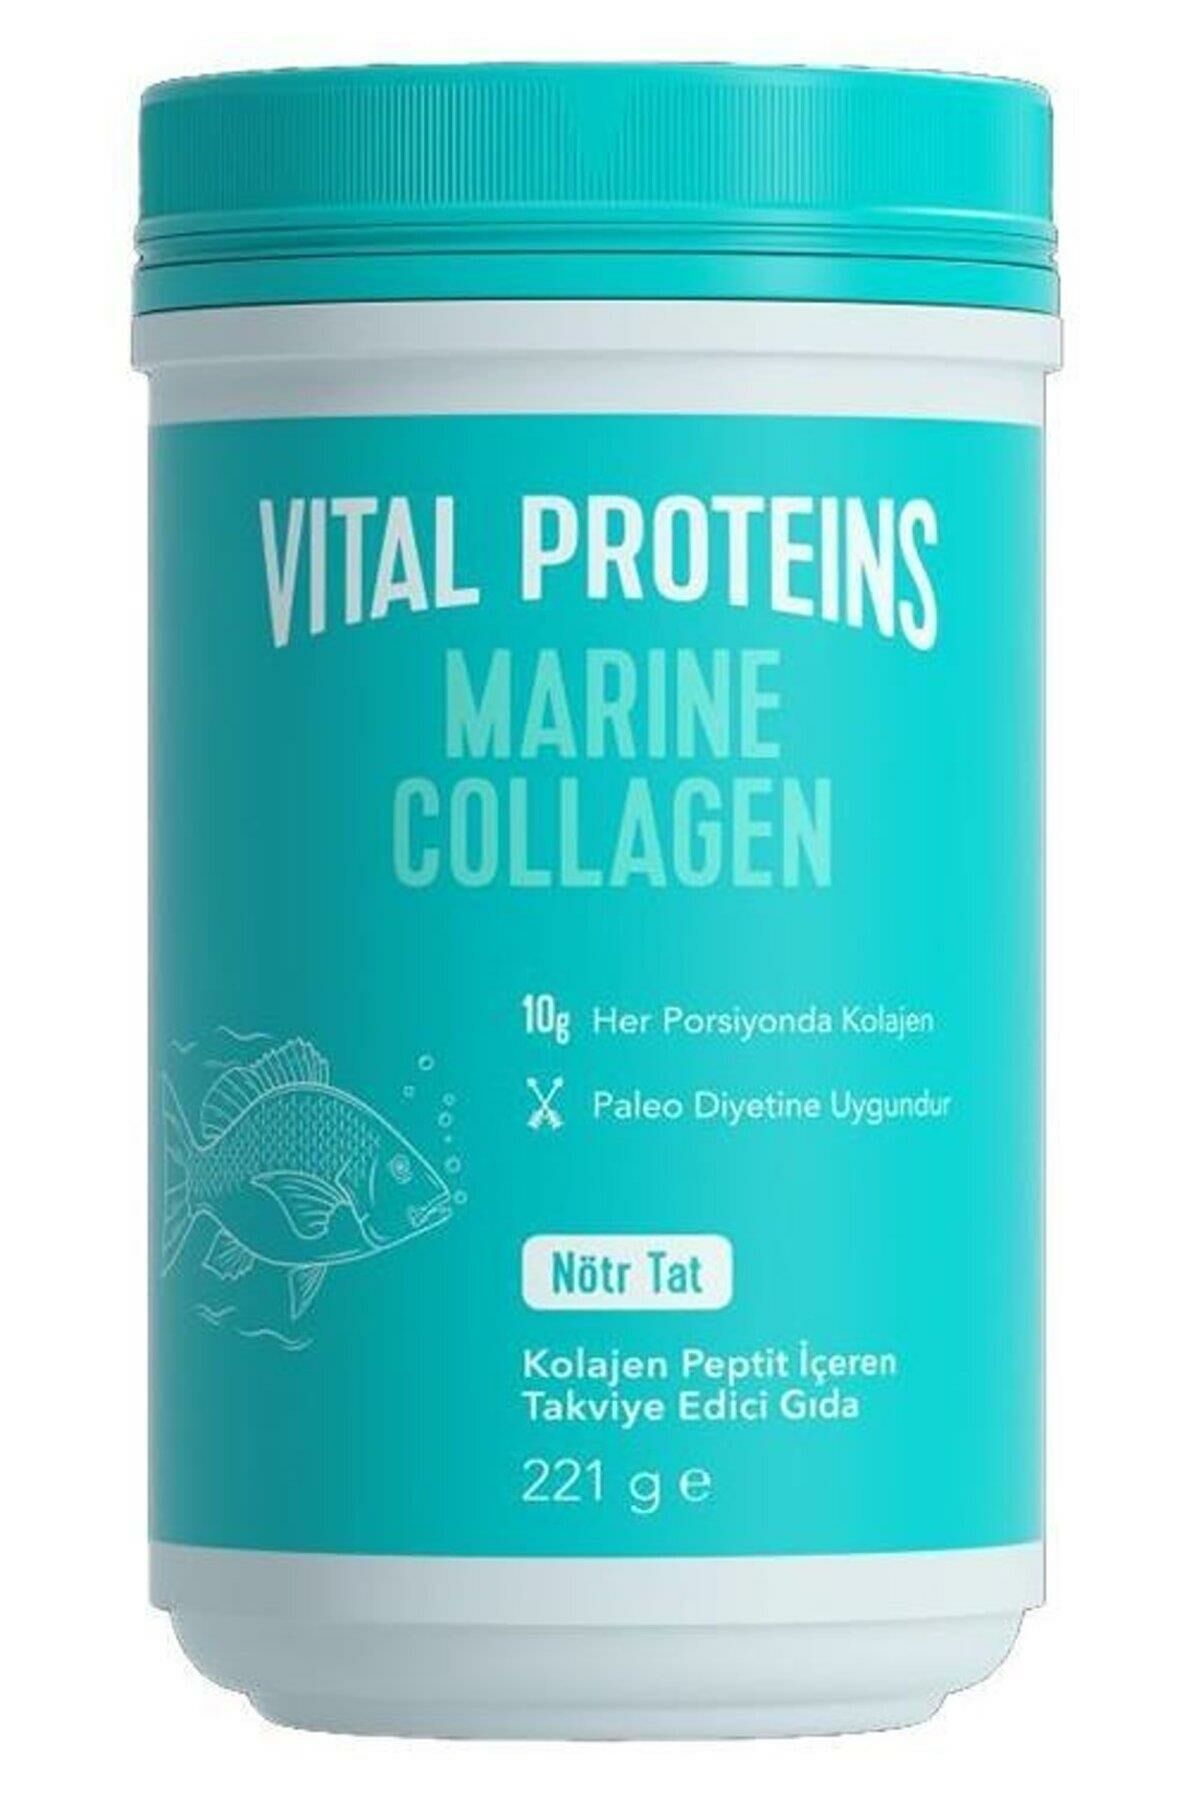 Vital Proteins Marine Collagen Nötr Tat 221g Toz